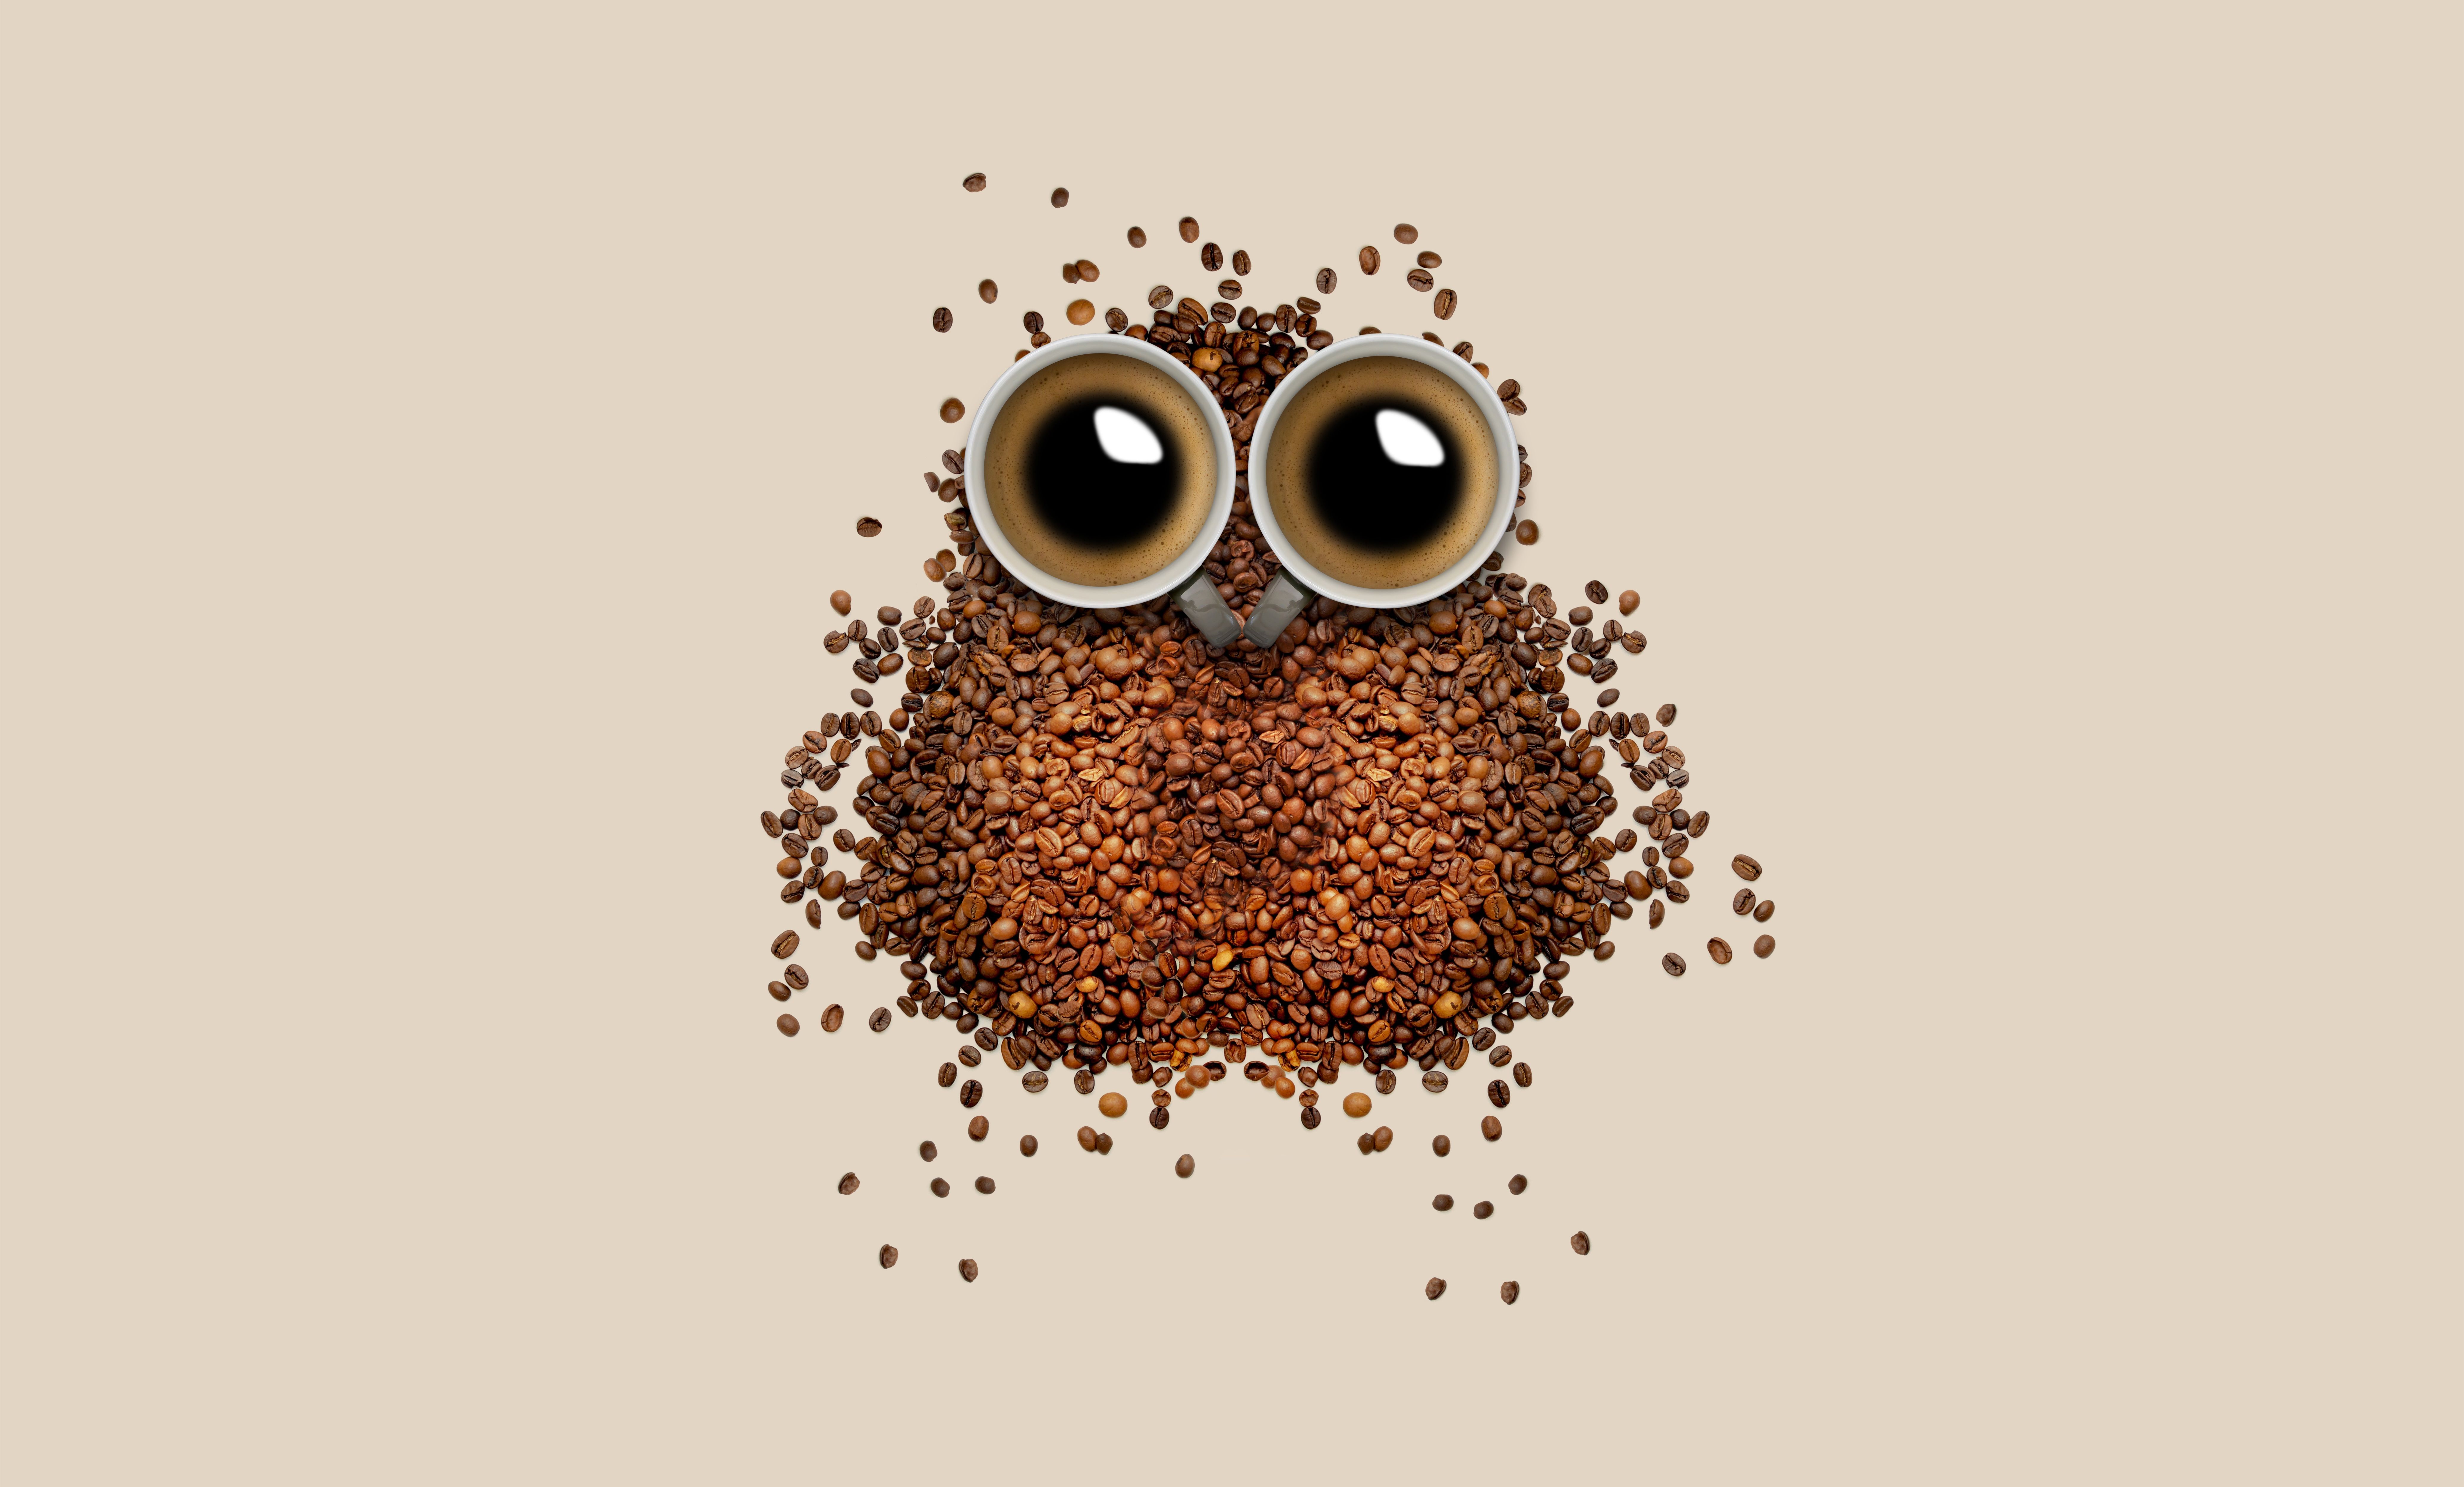 Coffee beans 4K Wallpaper, Owl, Coffee cup, Brown, Drinks, Caffeine, Beautiful, 5K, 8K, Food